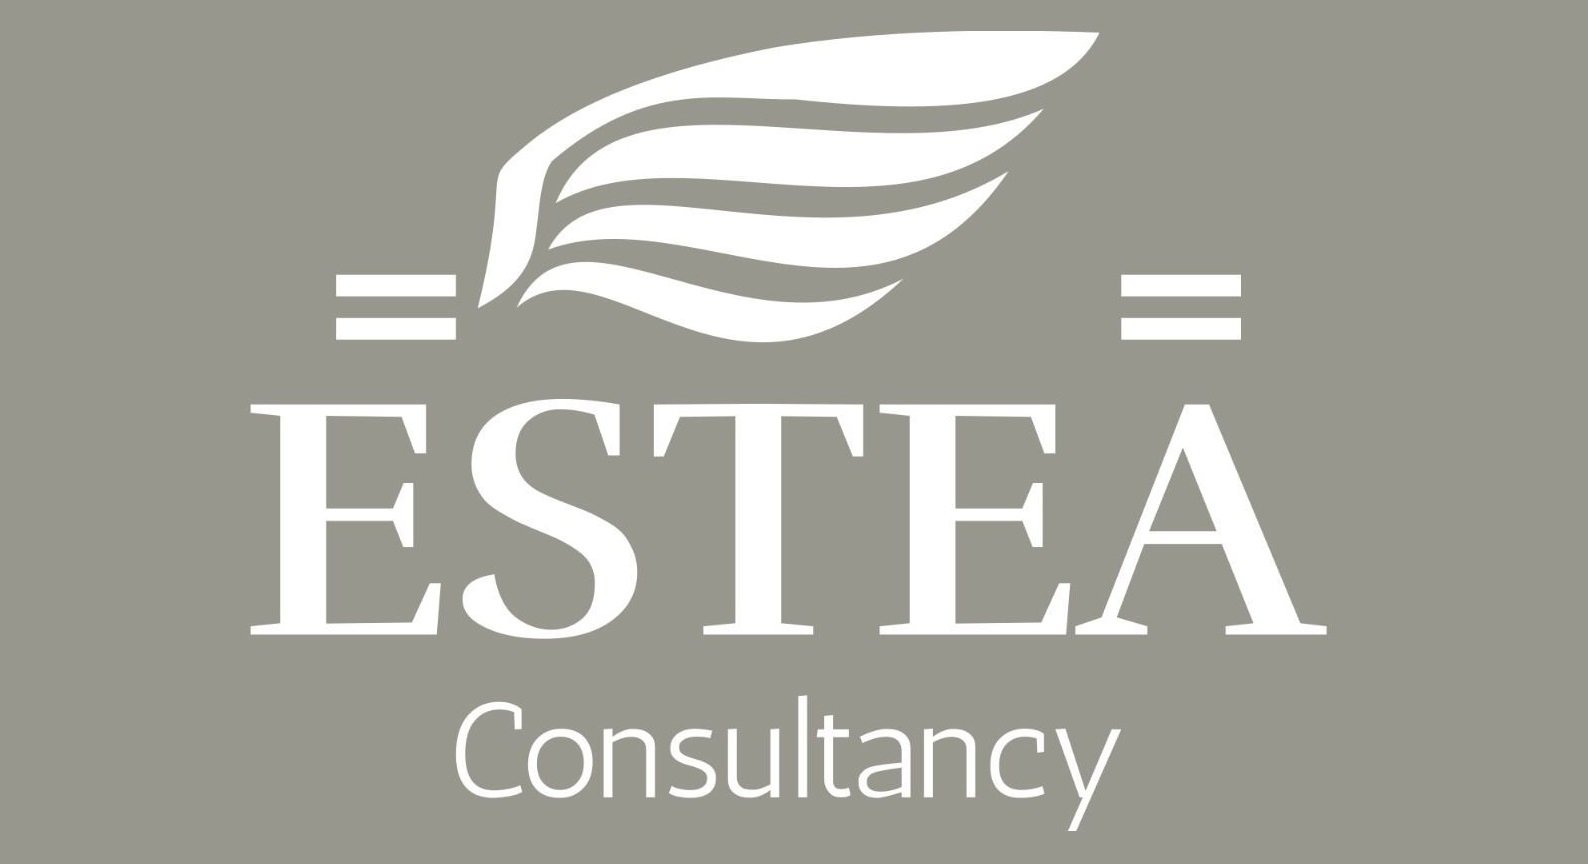 ESTEA Consultancy